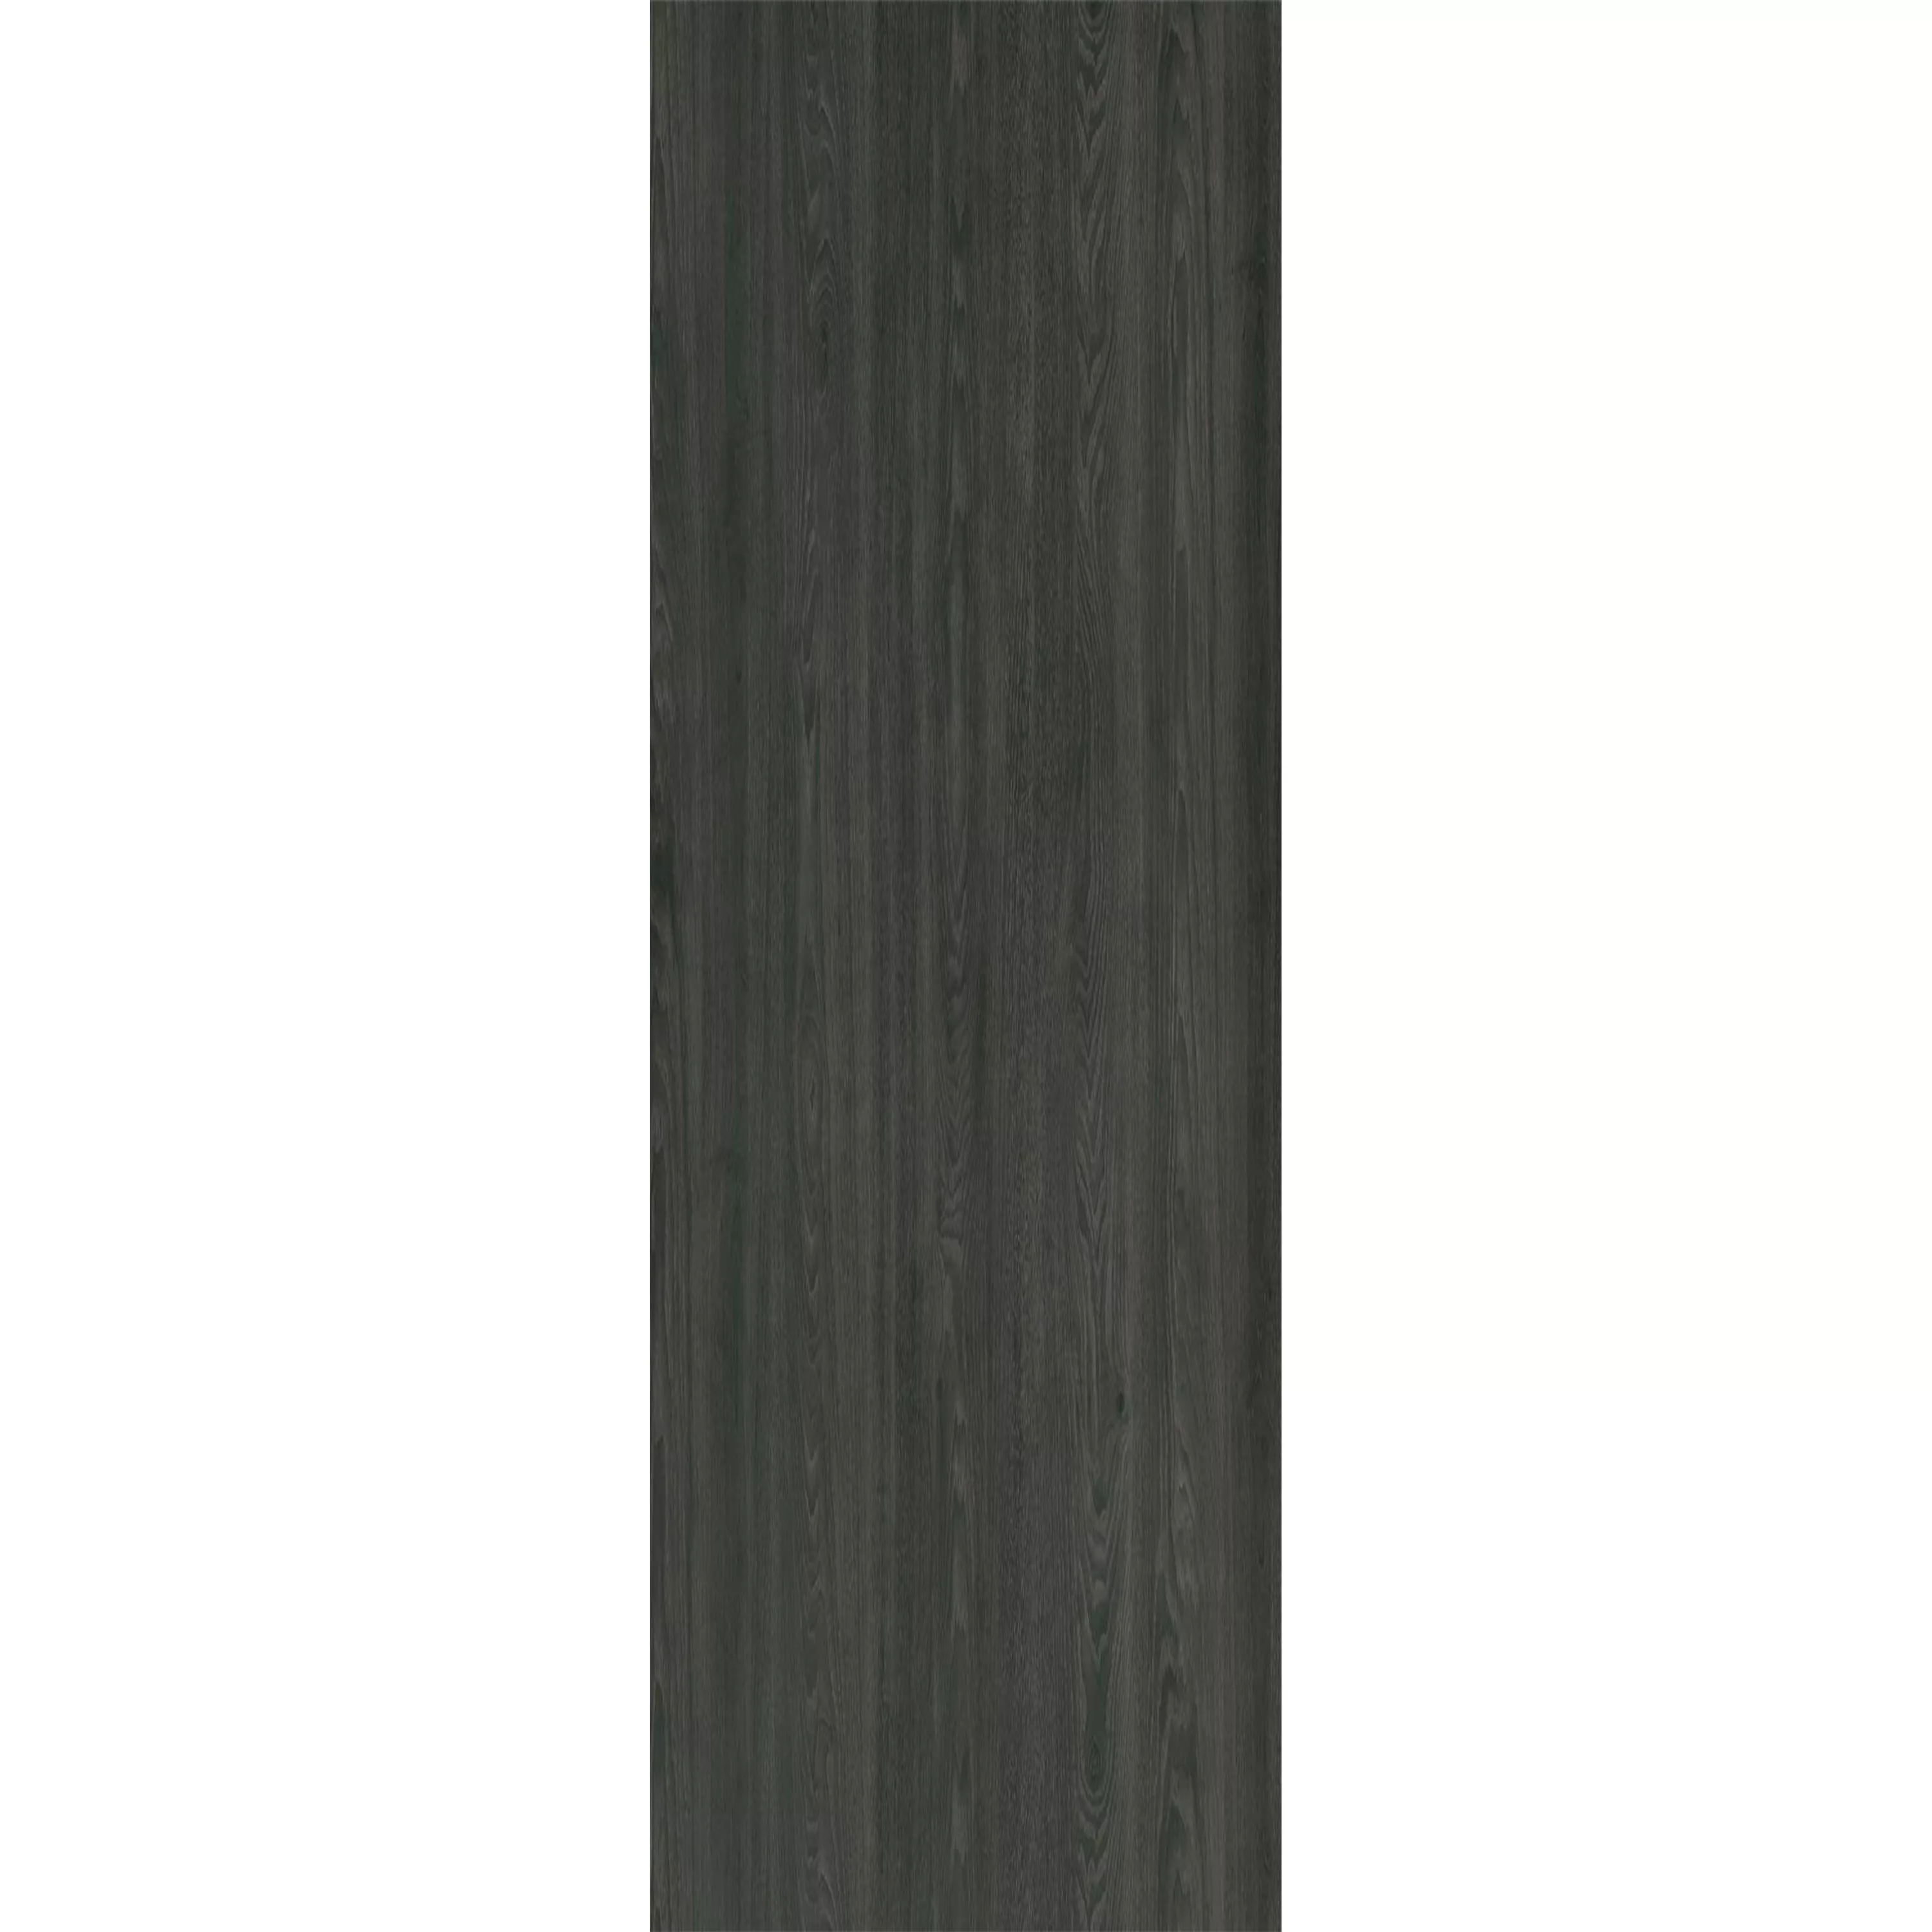 Vinylboden Klicksystem Blackwood Anthrazit 17,2x121cm